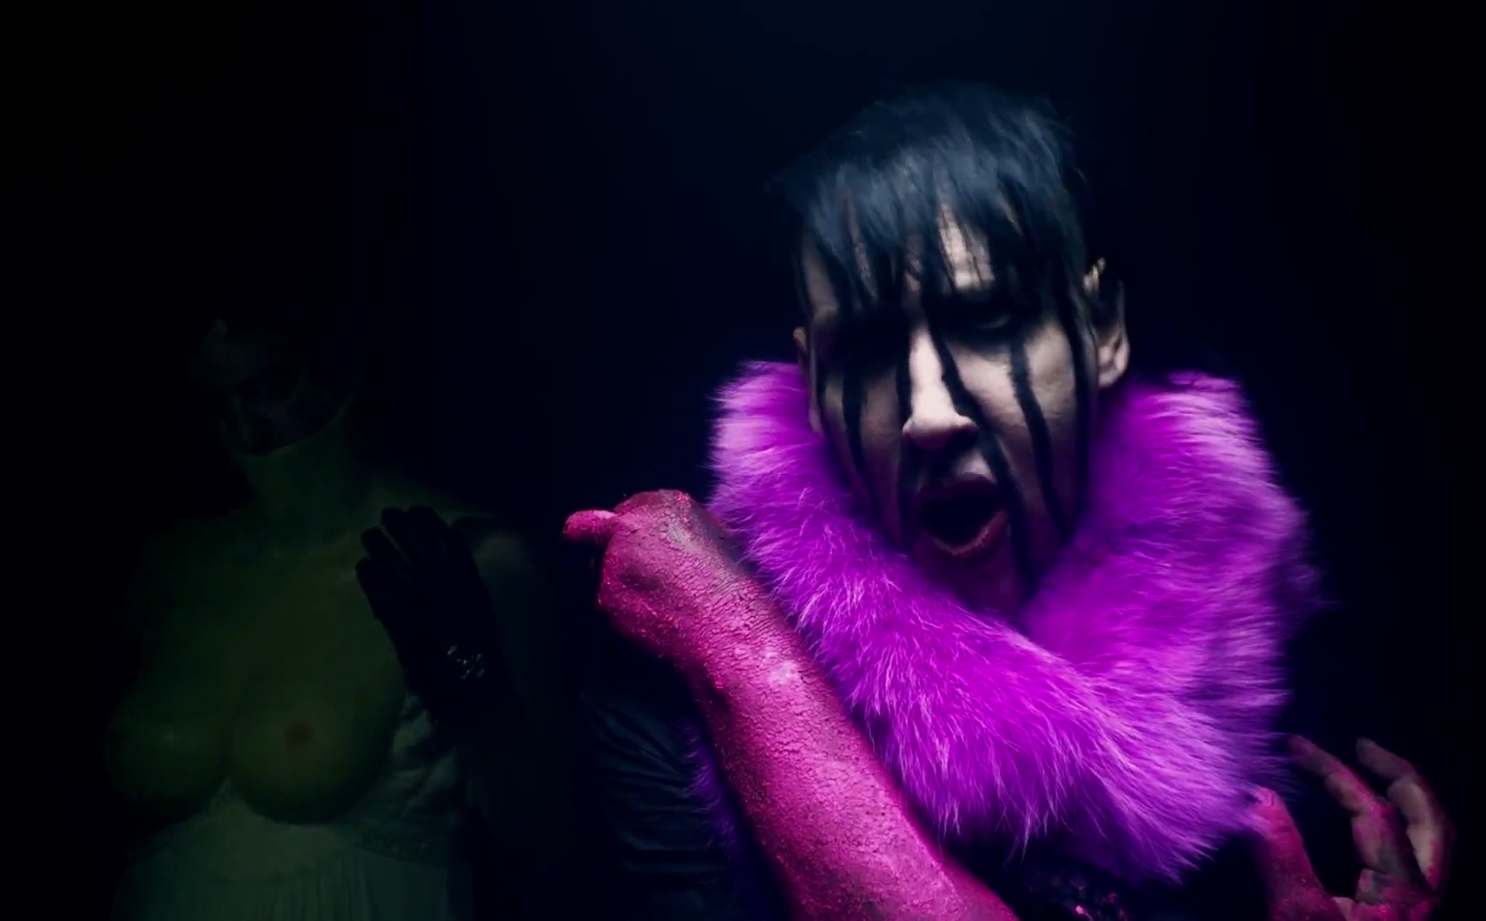 Marilyn Manson - Slo-Mo-Tion